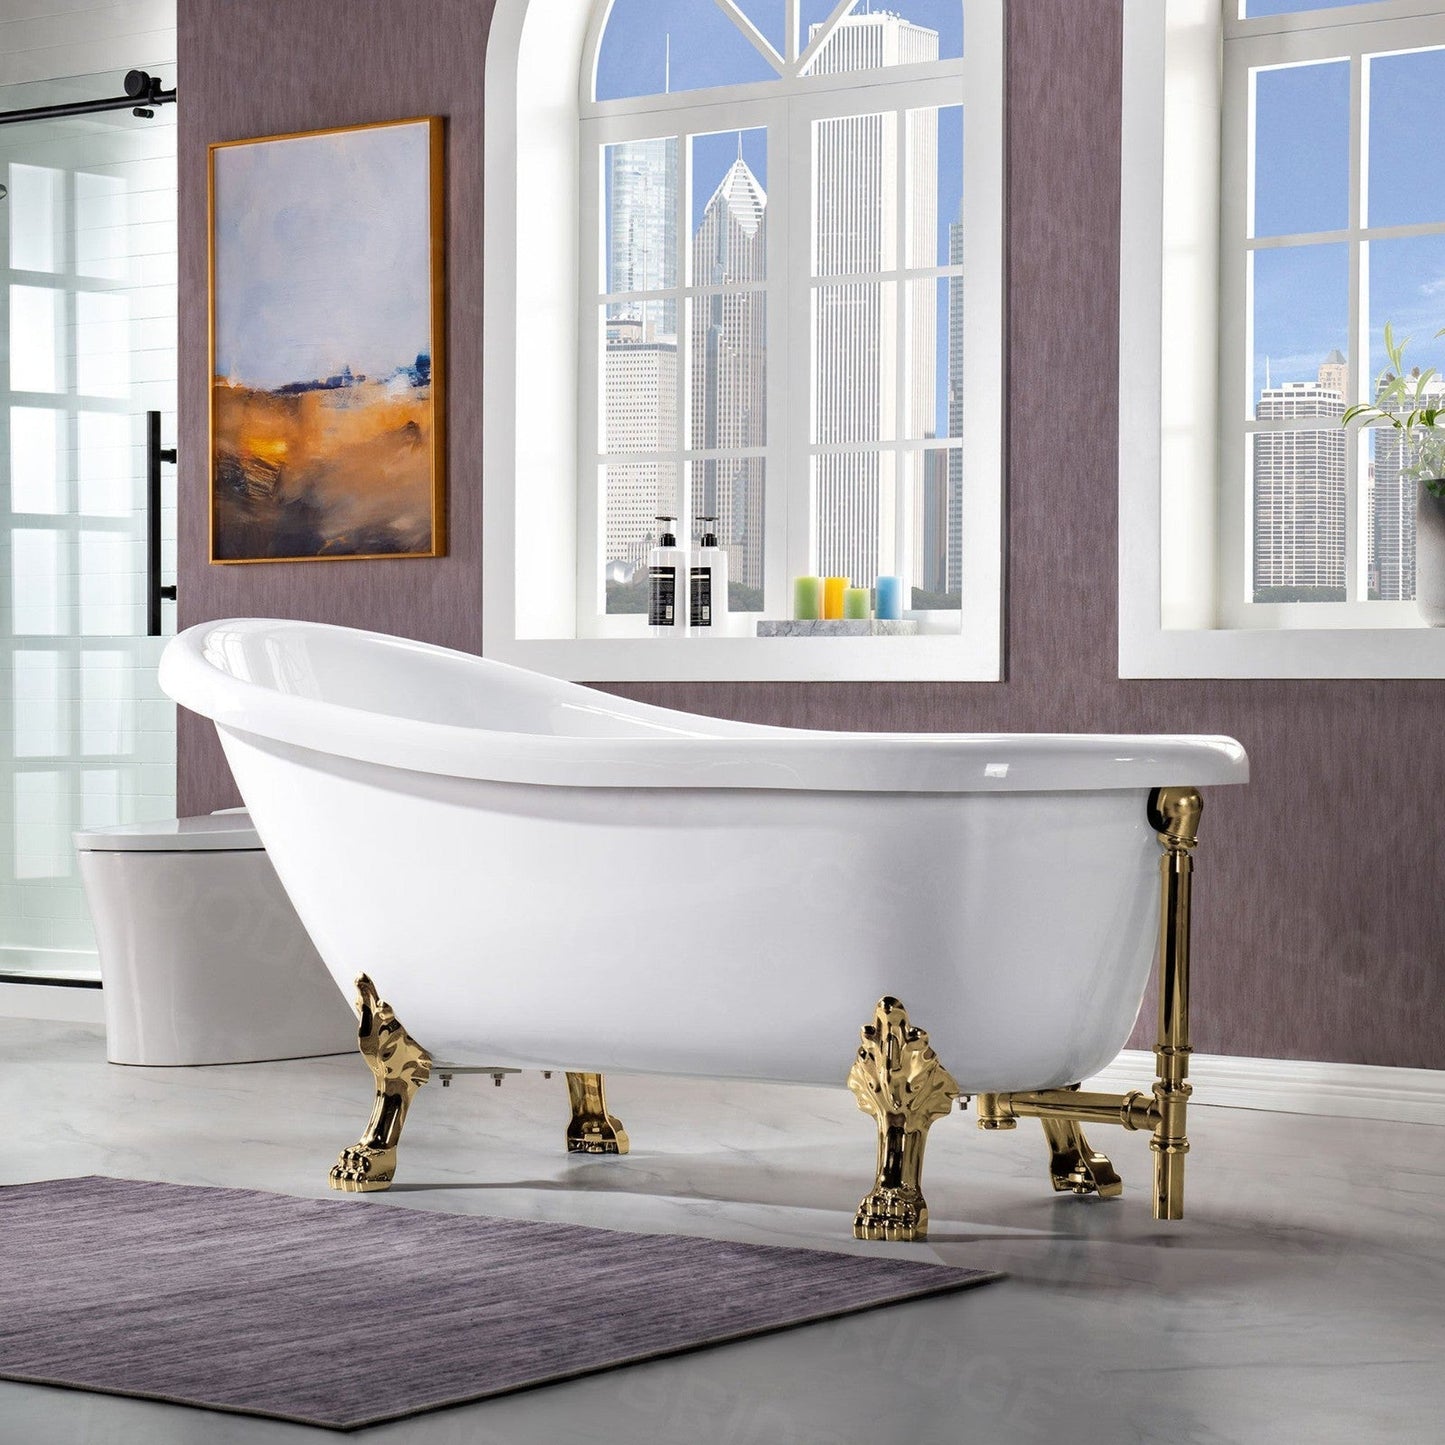 WoodBridge 67" White Acrylic Slipper Clawfoot Bath Tub With Polished Gold Feet, Drain, Overflow, F-0019PG Tub Filler and Caddy Tray